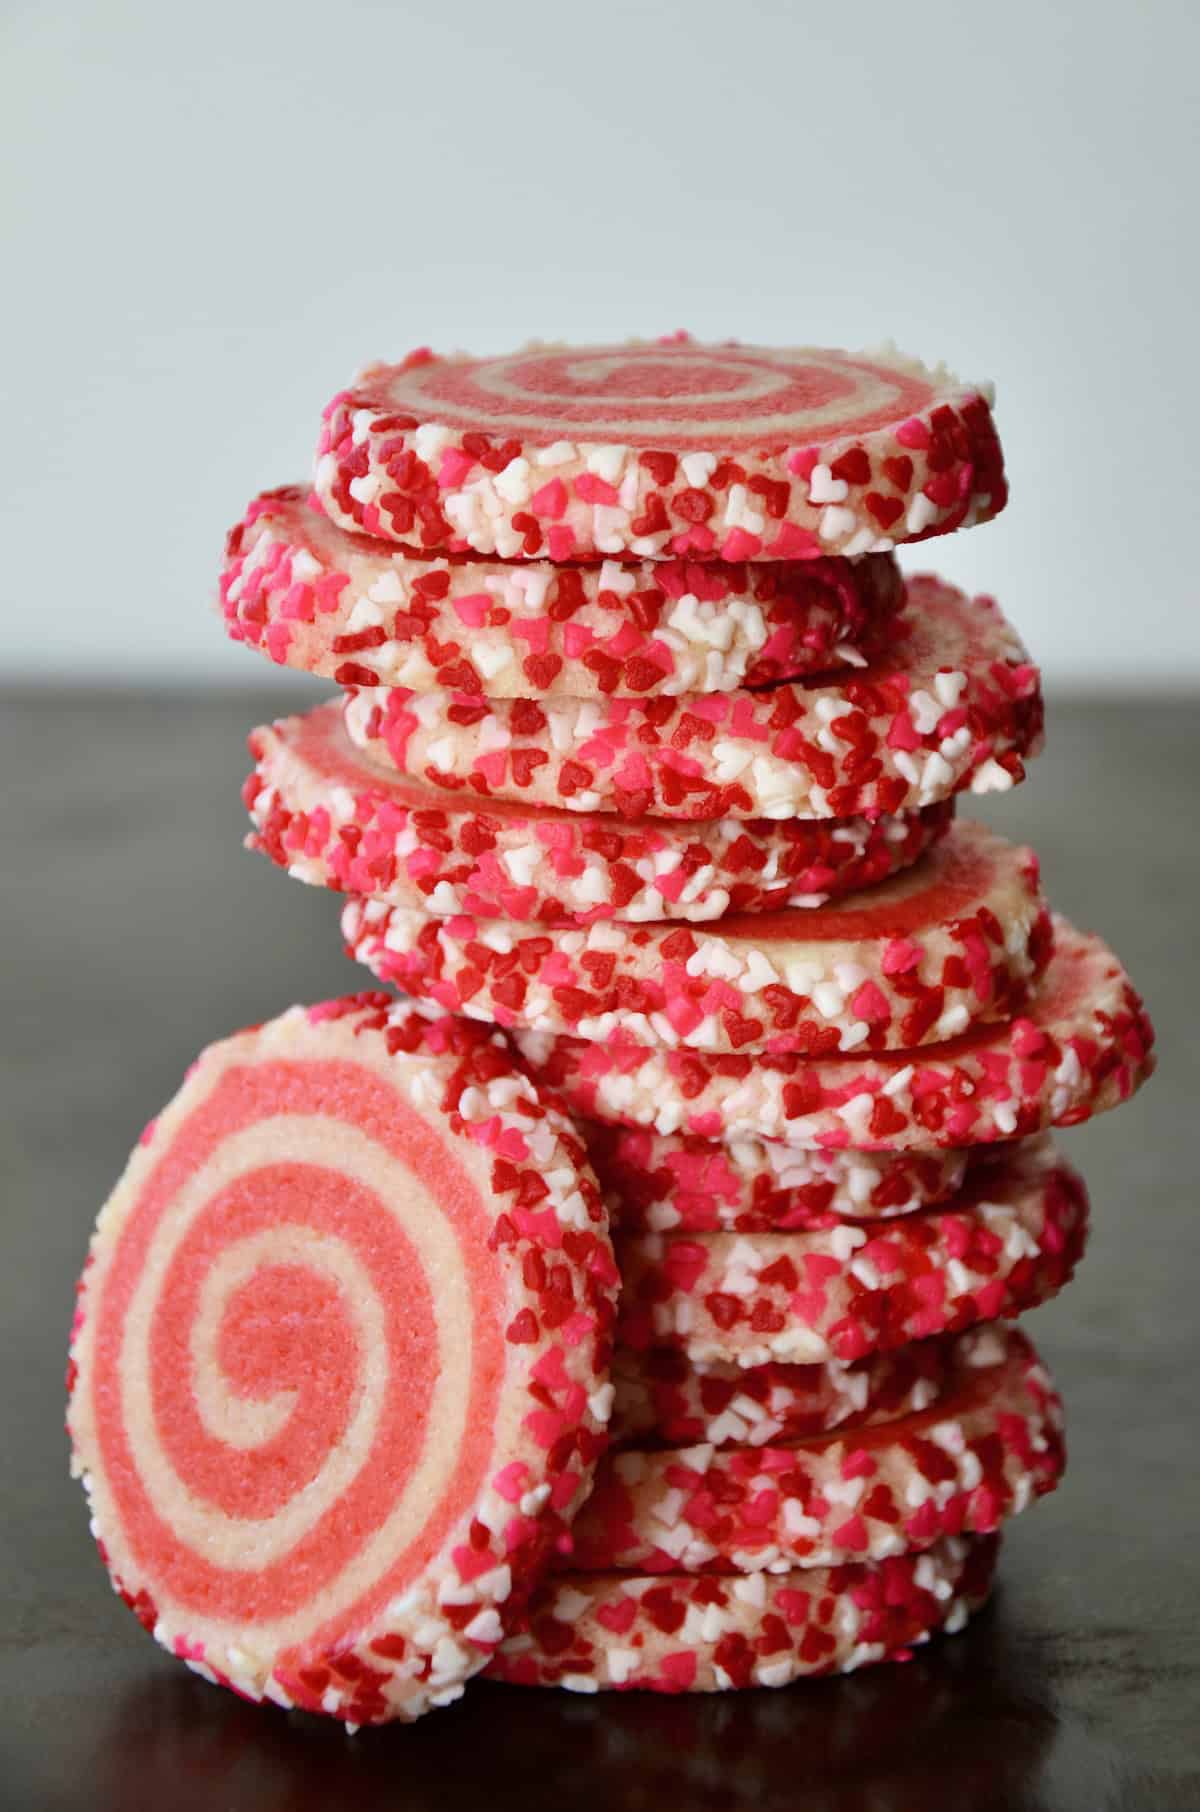 Pink pinwheel sugar cookies, edged in sprinkles, are stacked on a dark surface.